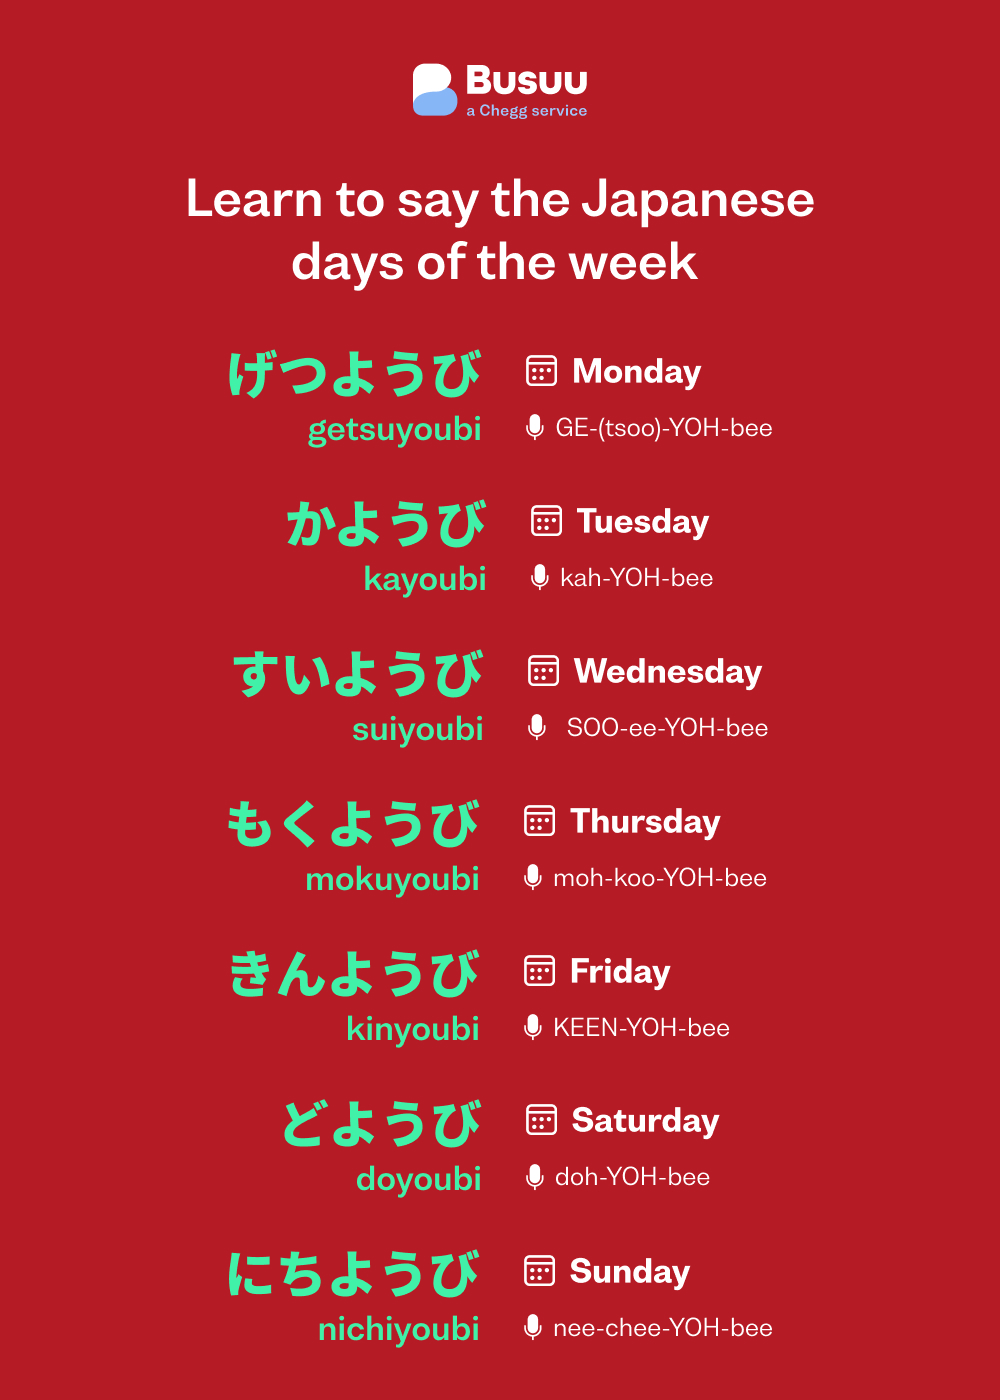 japanese-days-of-the-week-1-trick-to-memorise-them-busuu